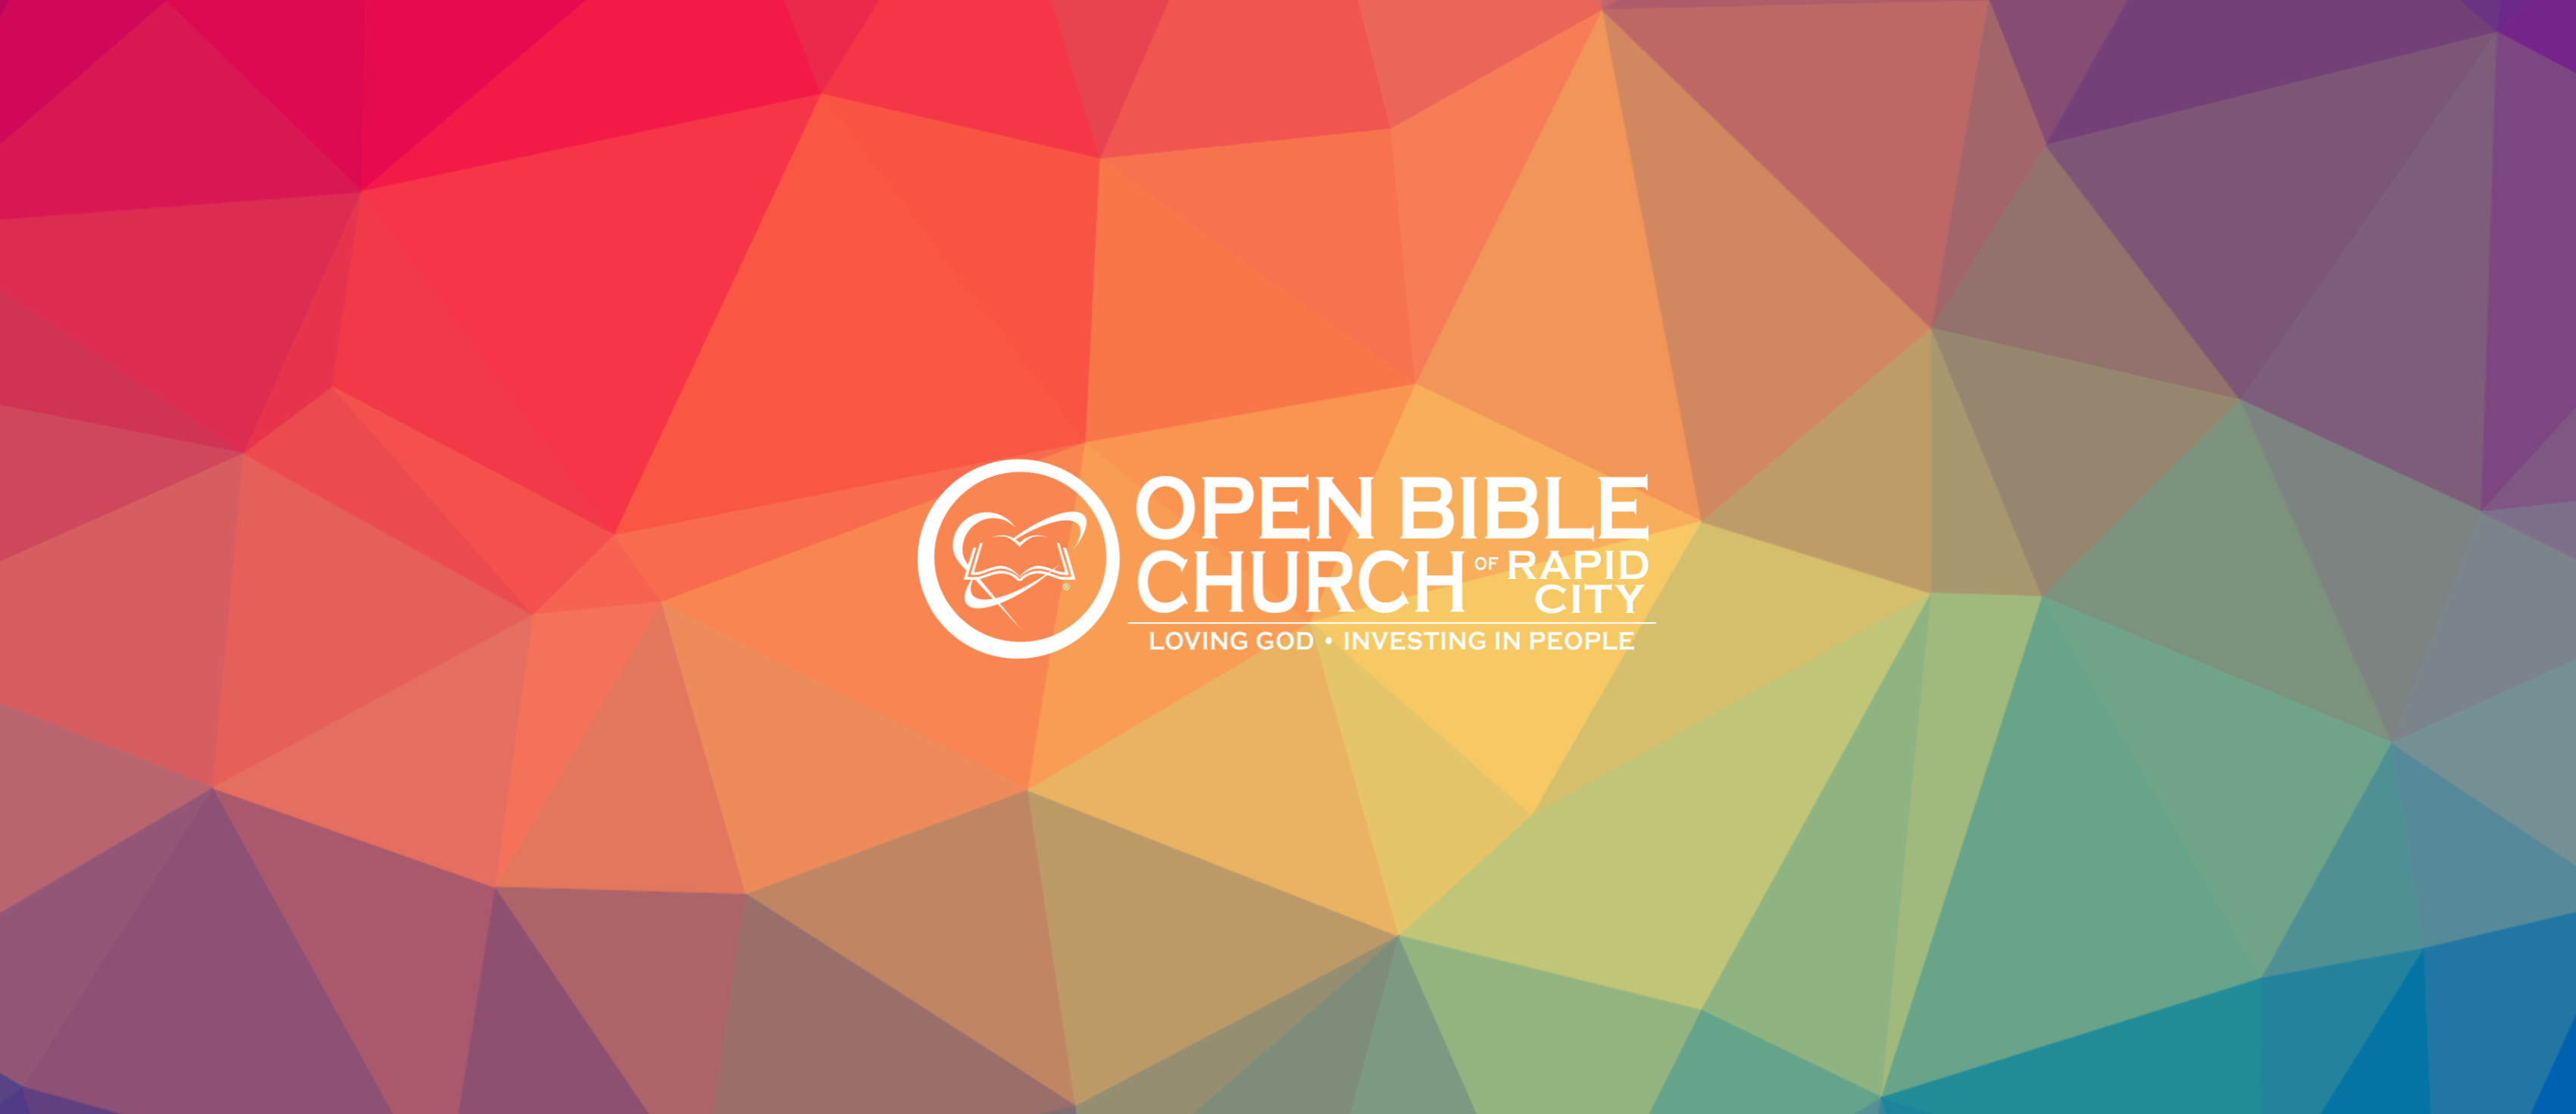 Open Bible Church of Rapid City